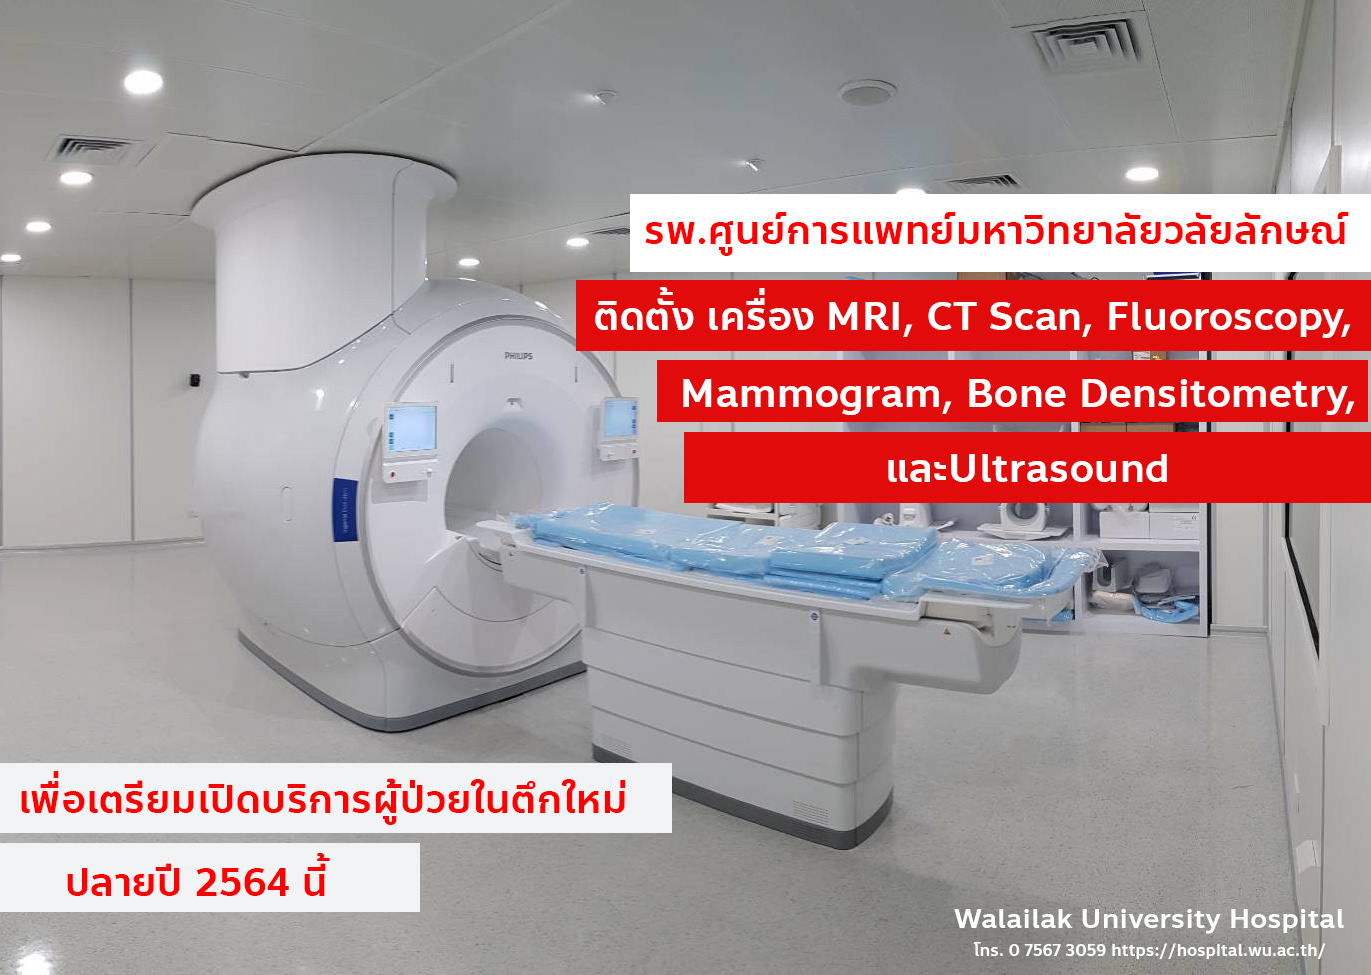 MRI, CT Scan, Fluoroscopy, Mammogram, Bone Densitometry และUltrasound